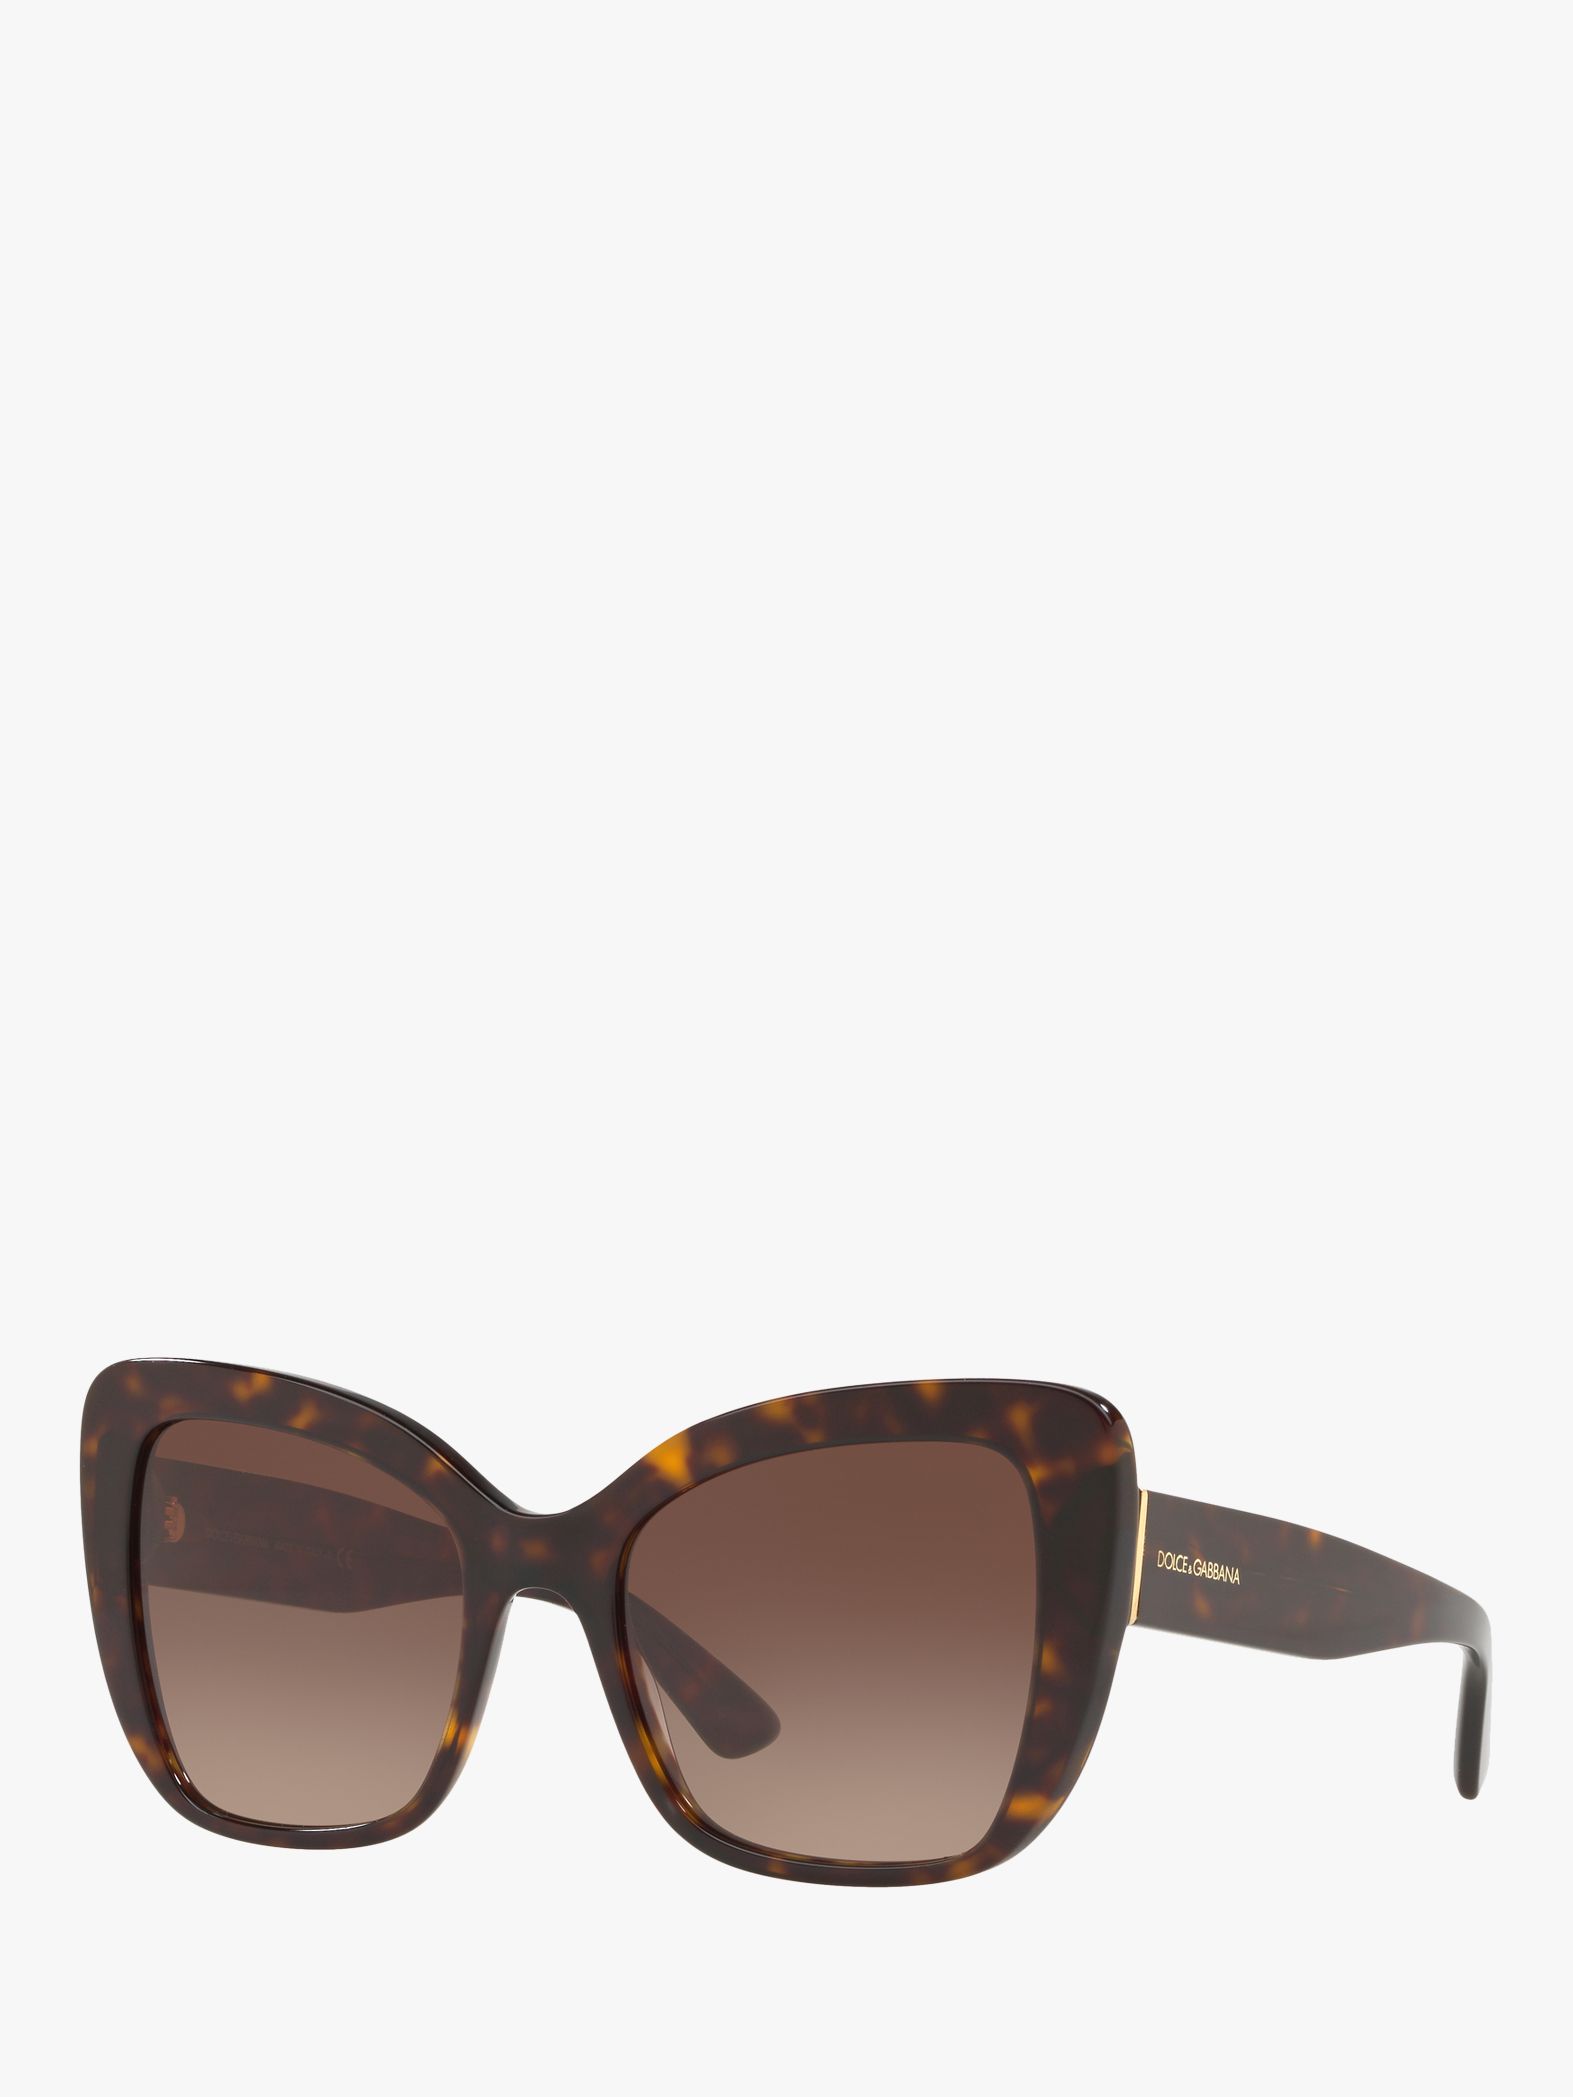 Arriba 65+ imagen dolce and gabbana brown sunglasses